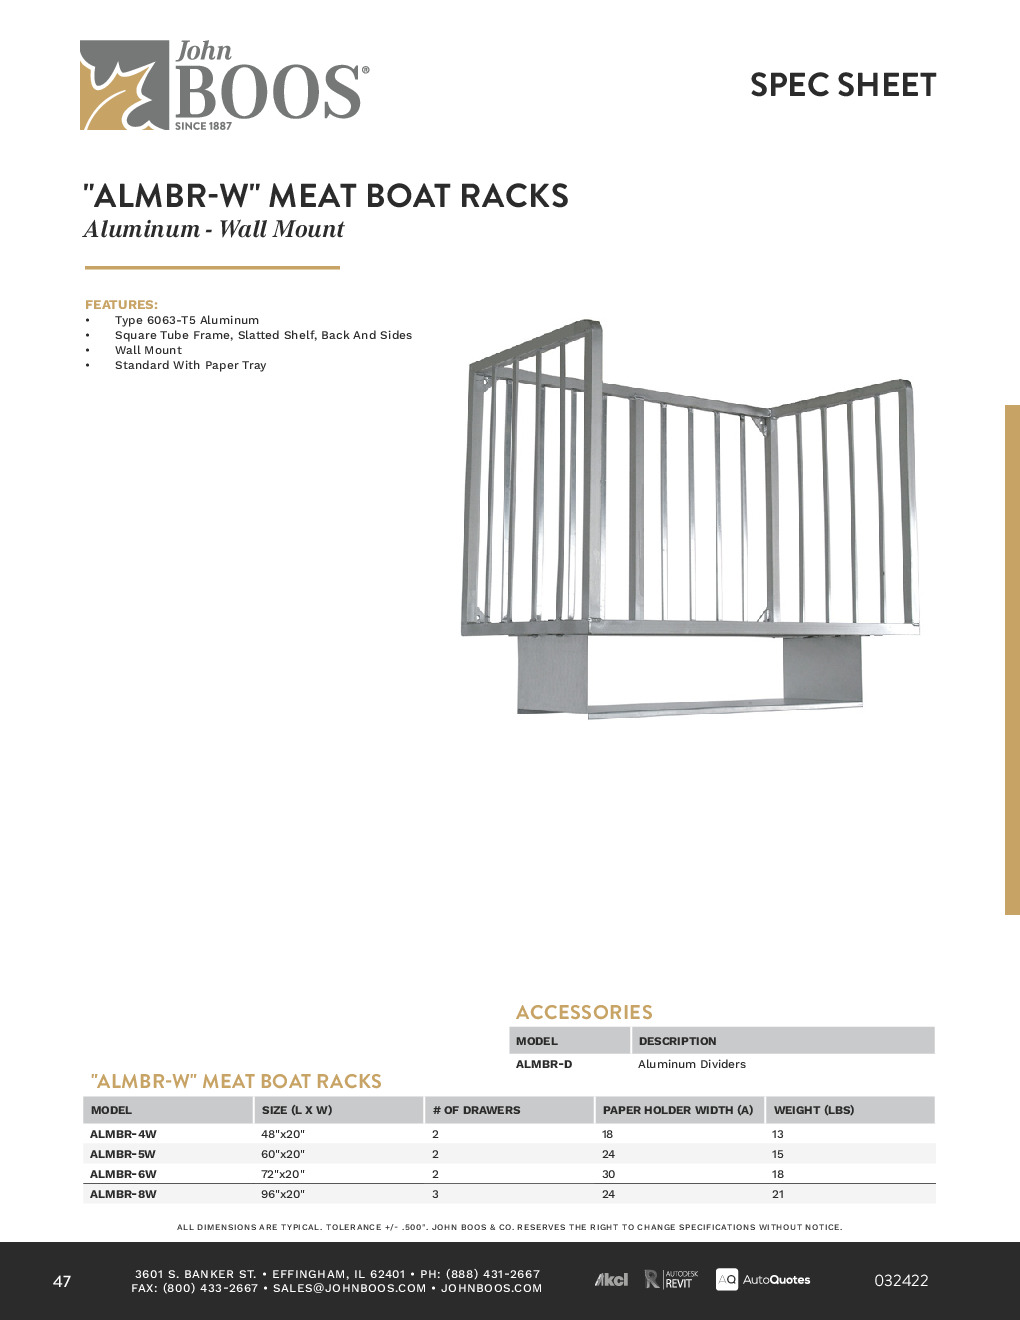 John Boos ALMBR-6W-X Boat Rack